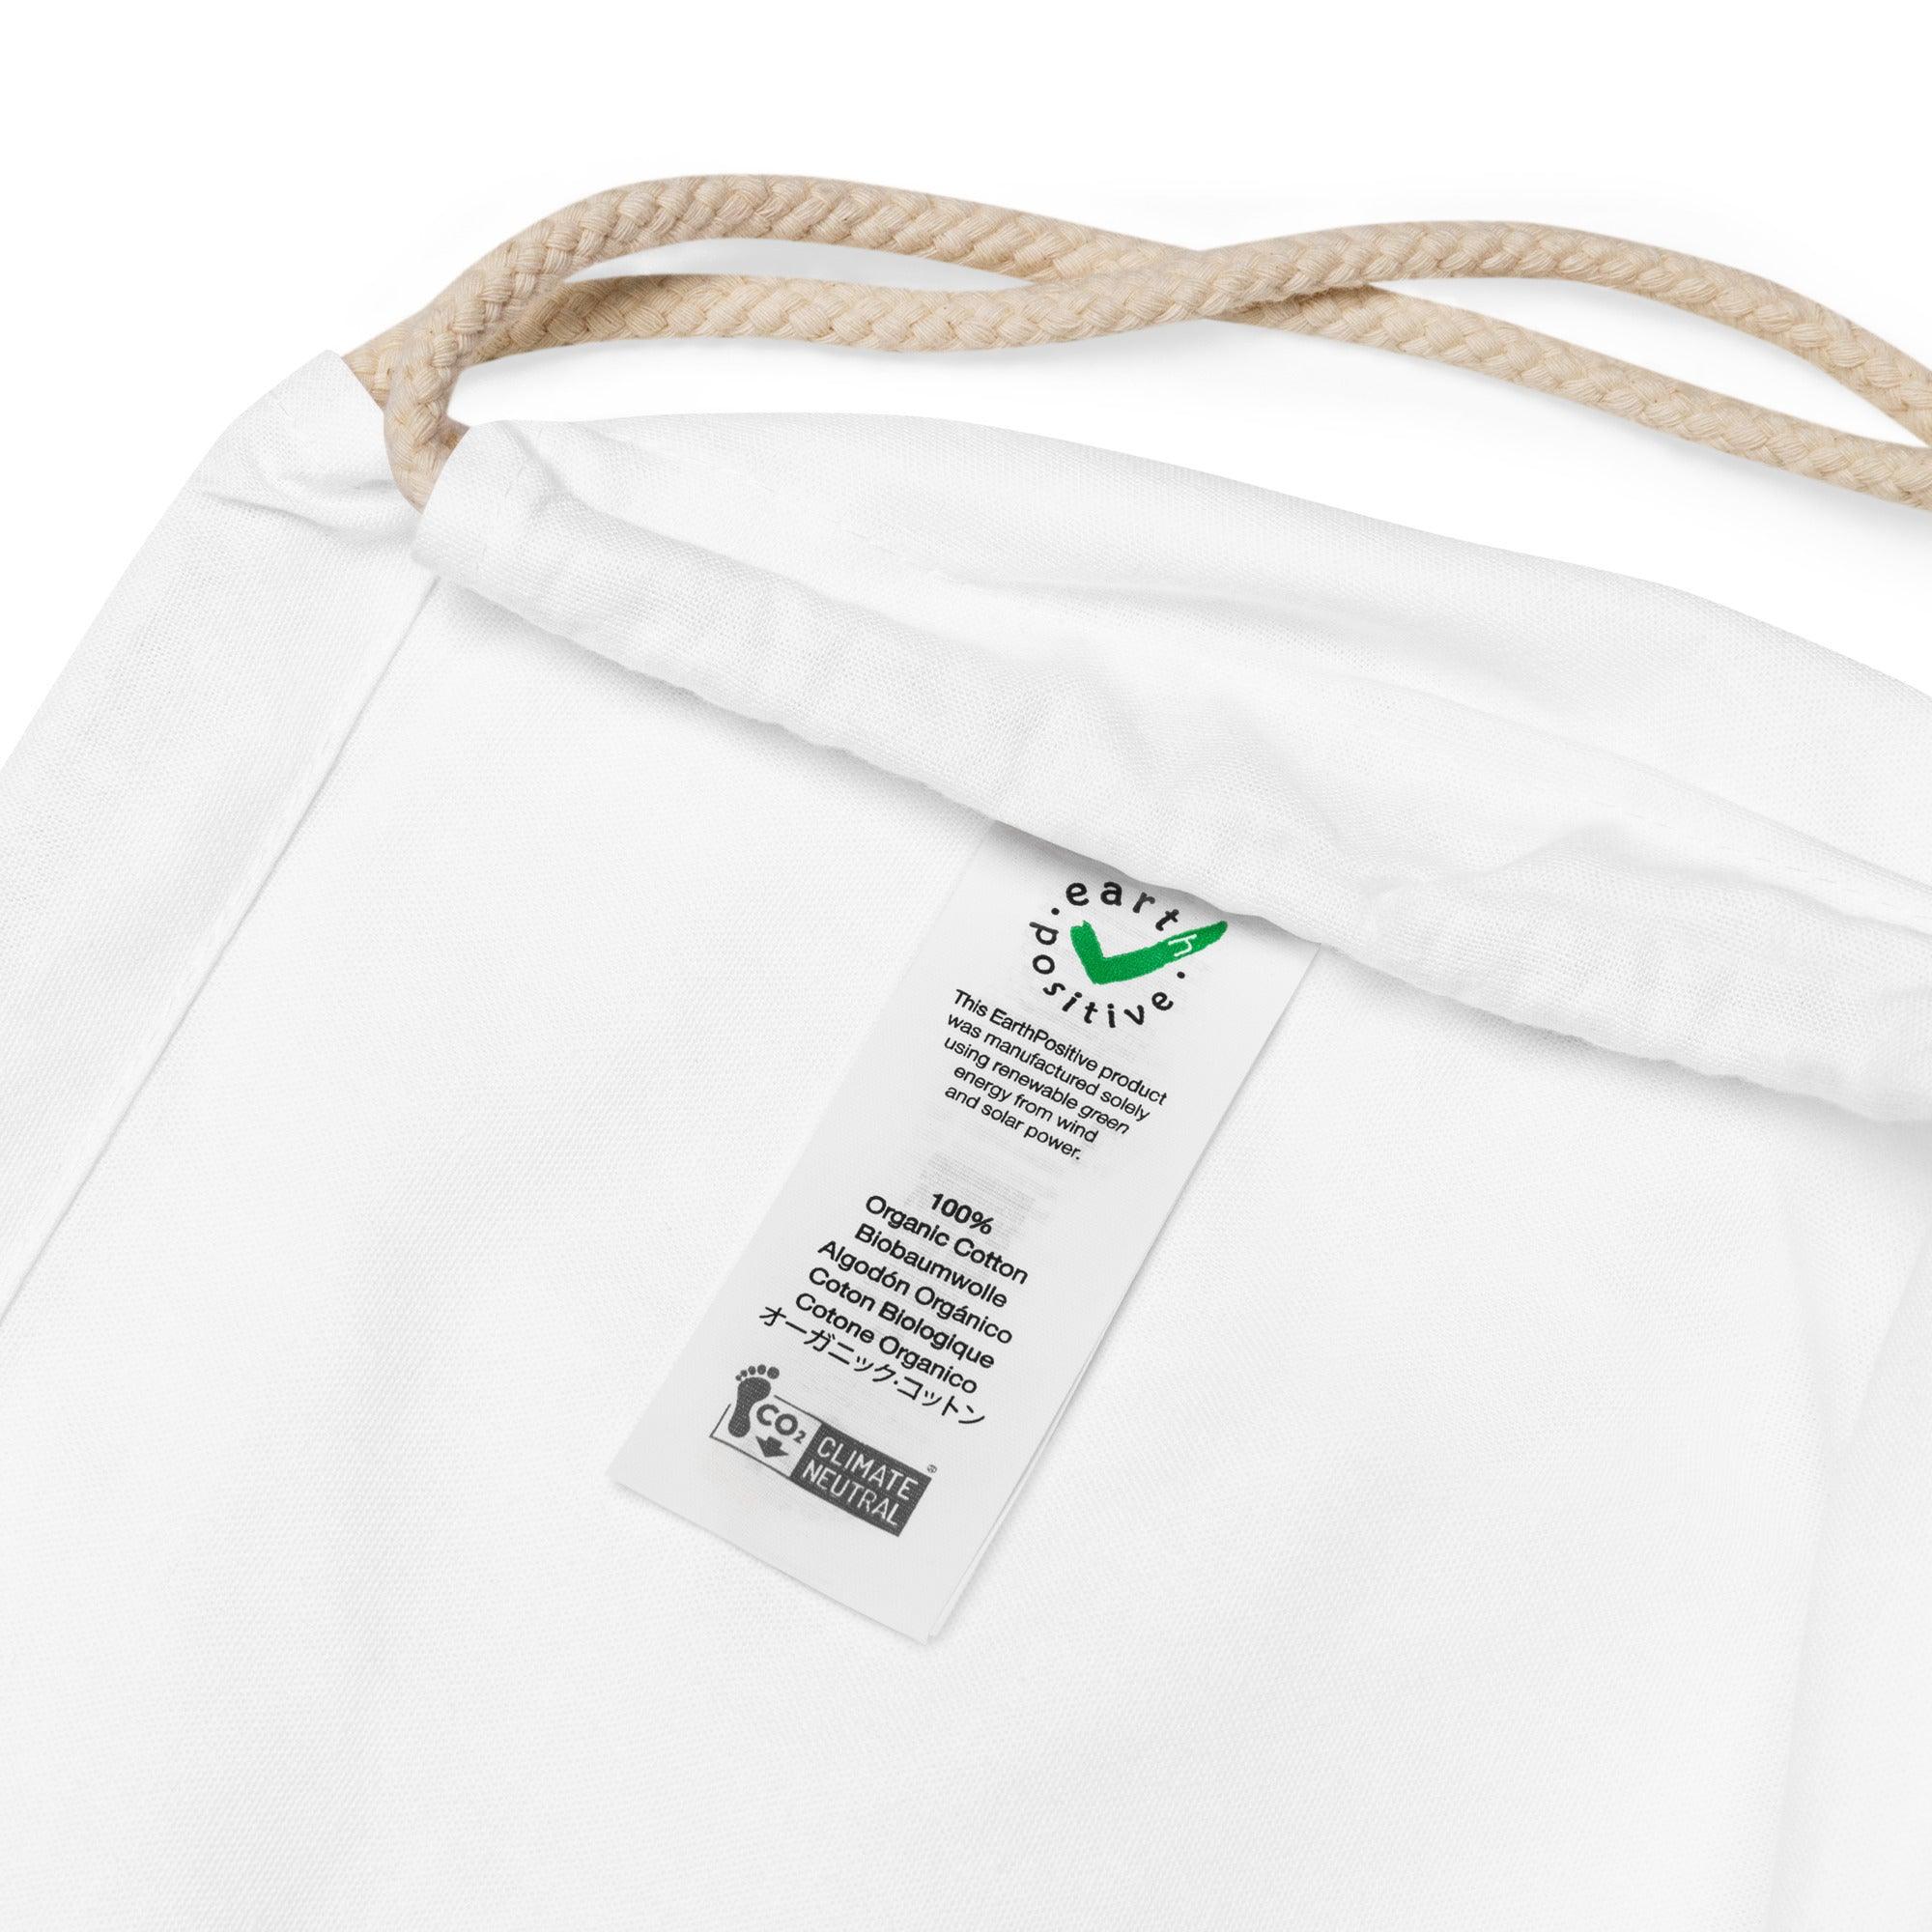 Organic cotton drawstring bag-Summer Love by Edward Martin - Elementologie